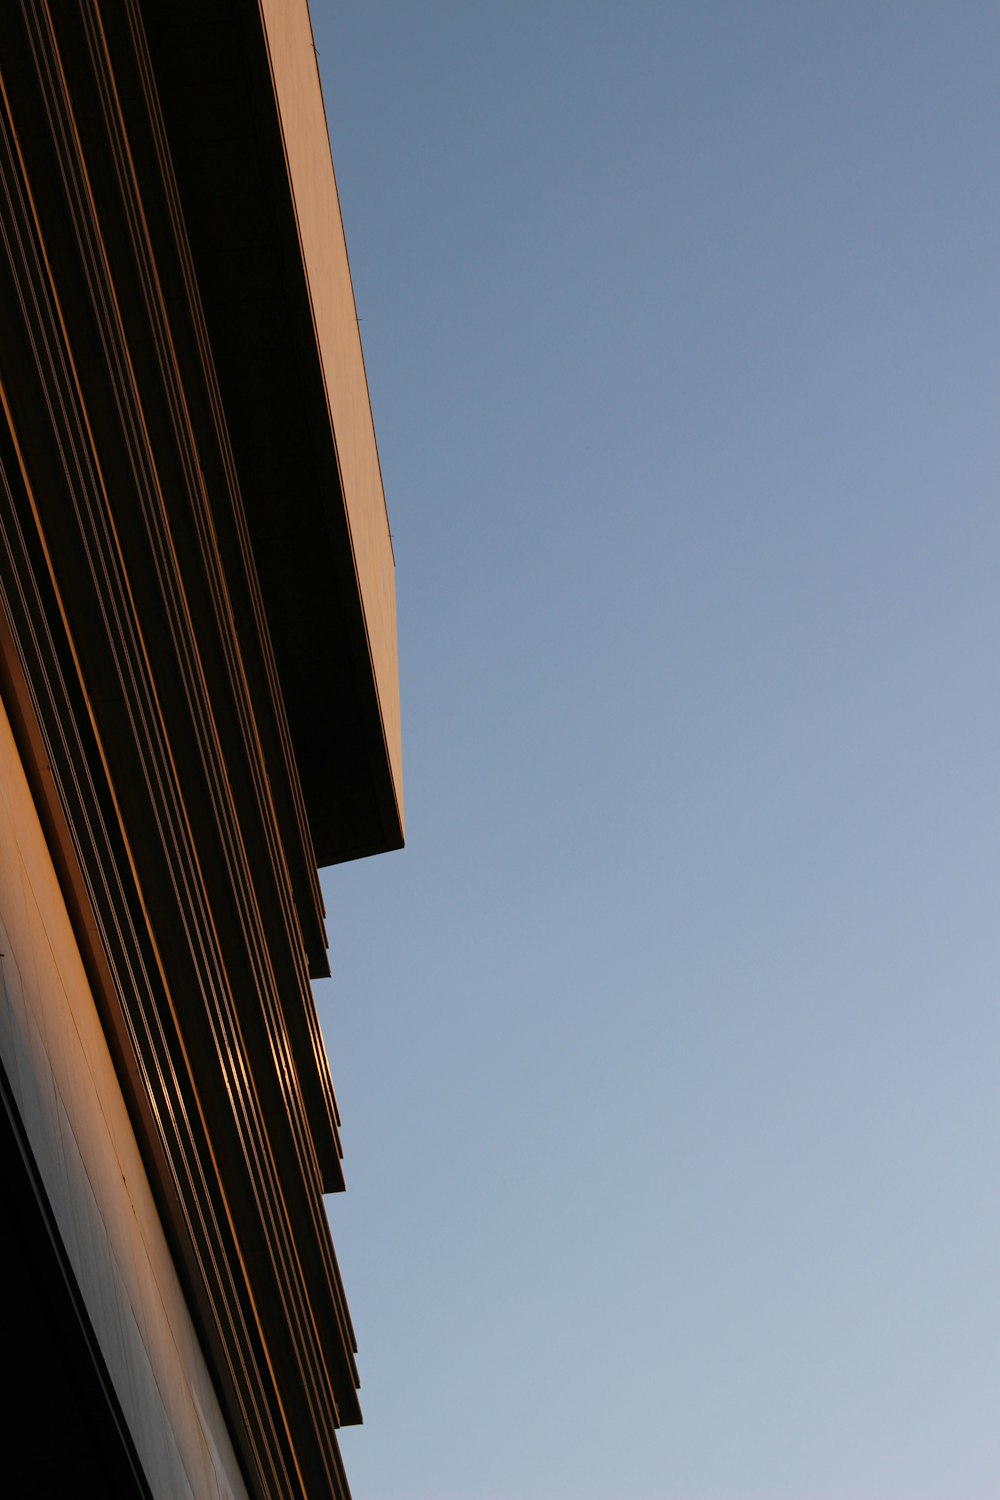 a close-up of a building